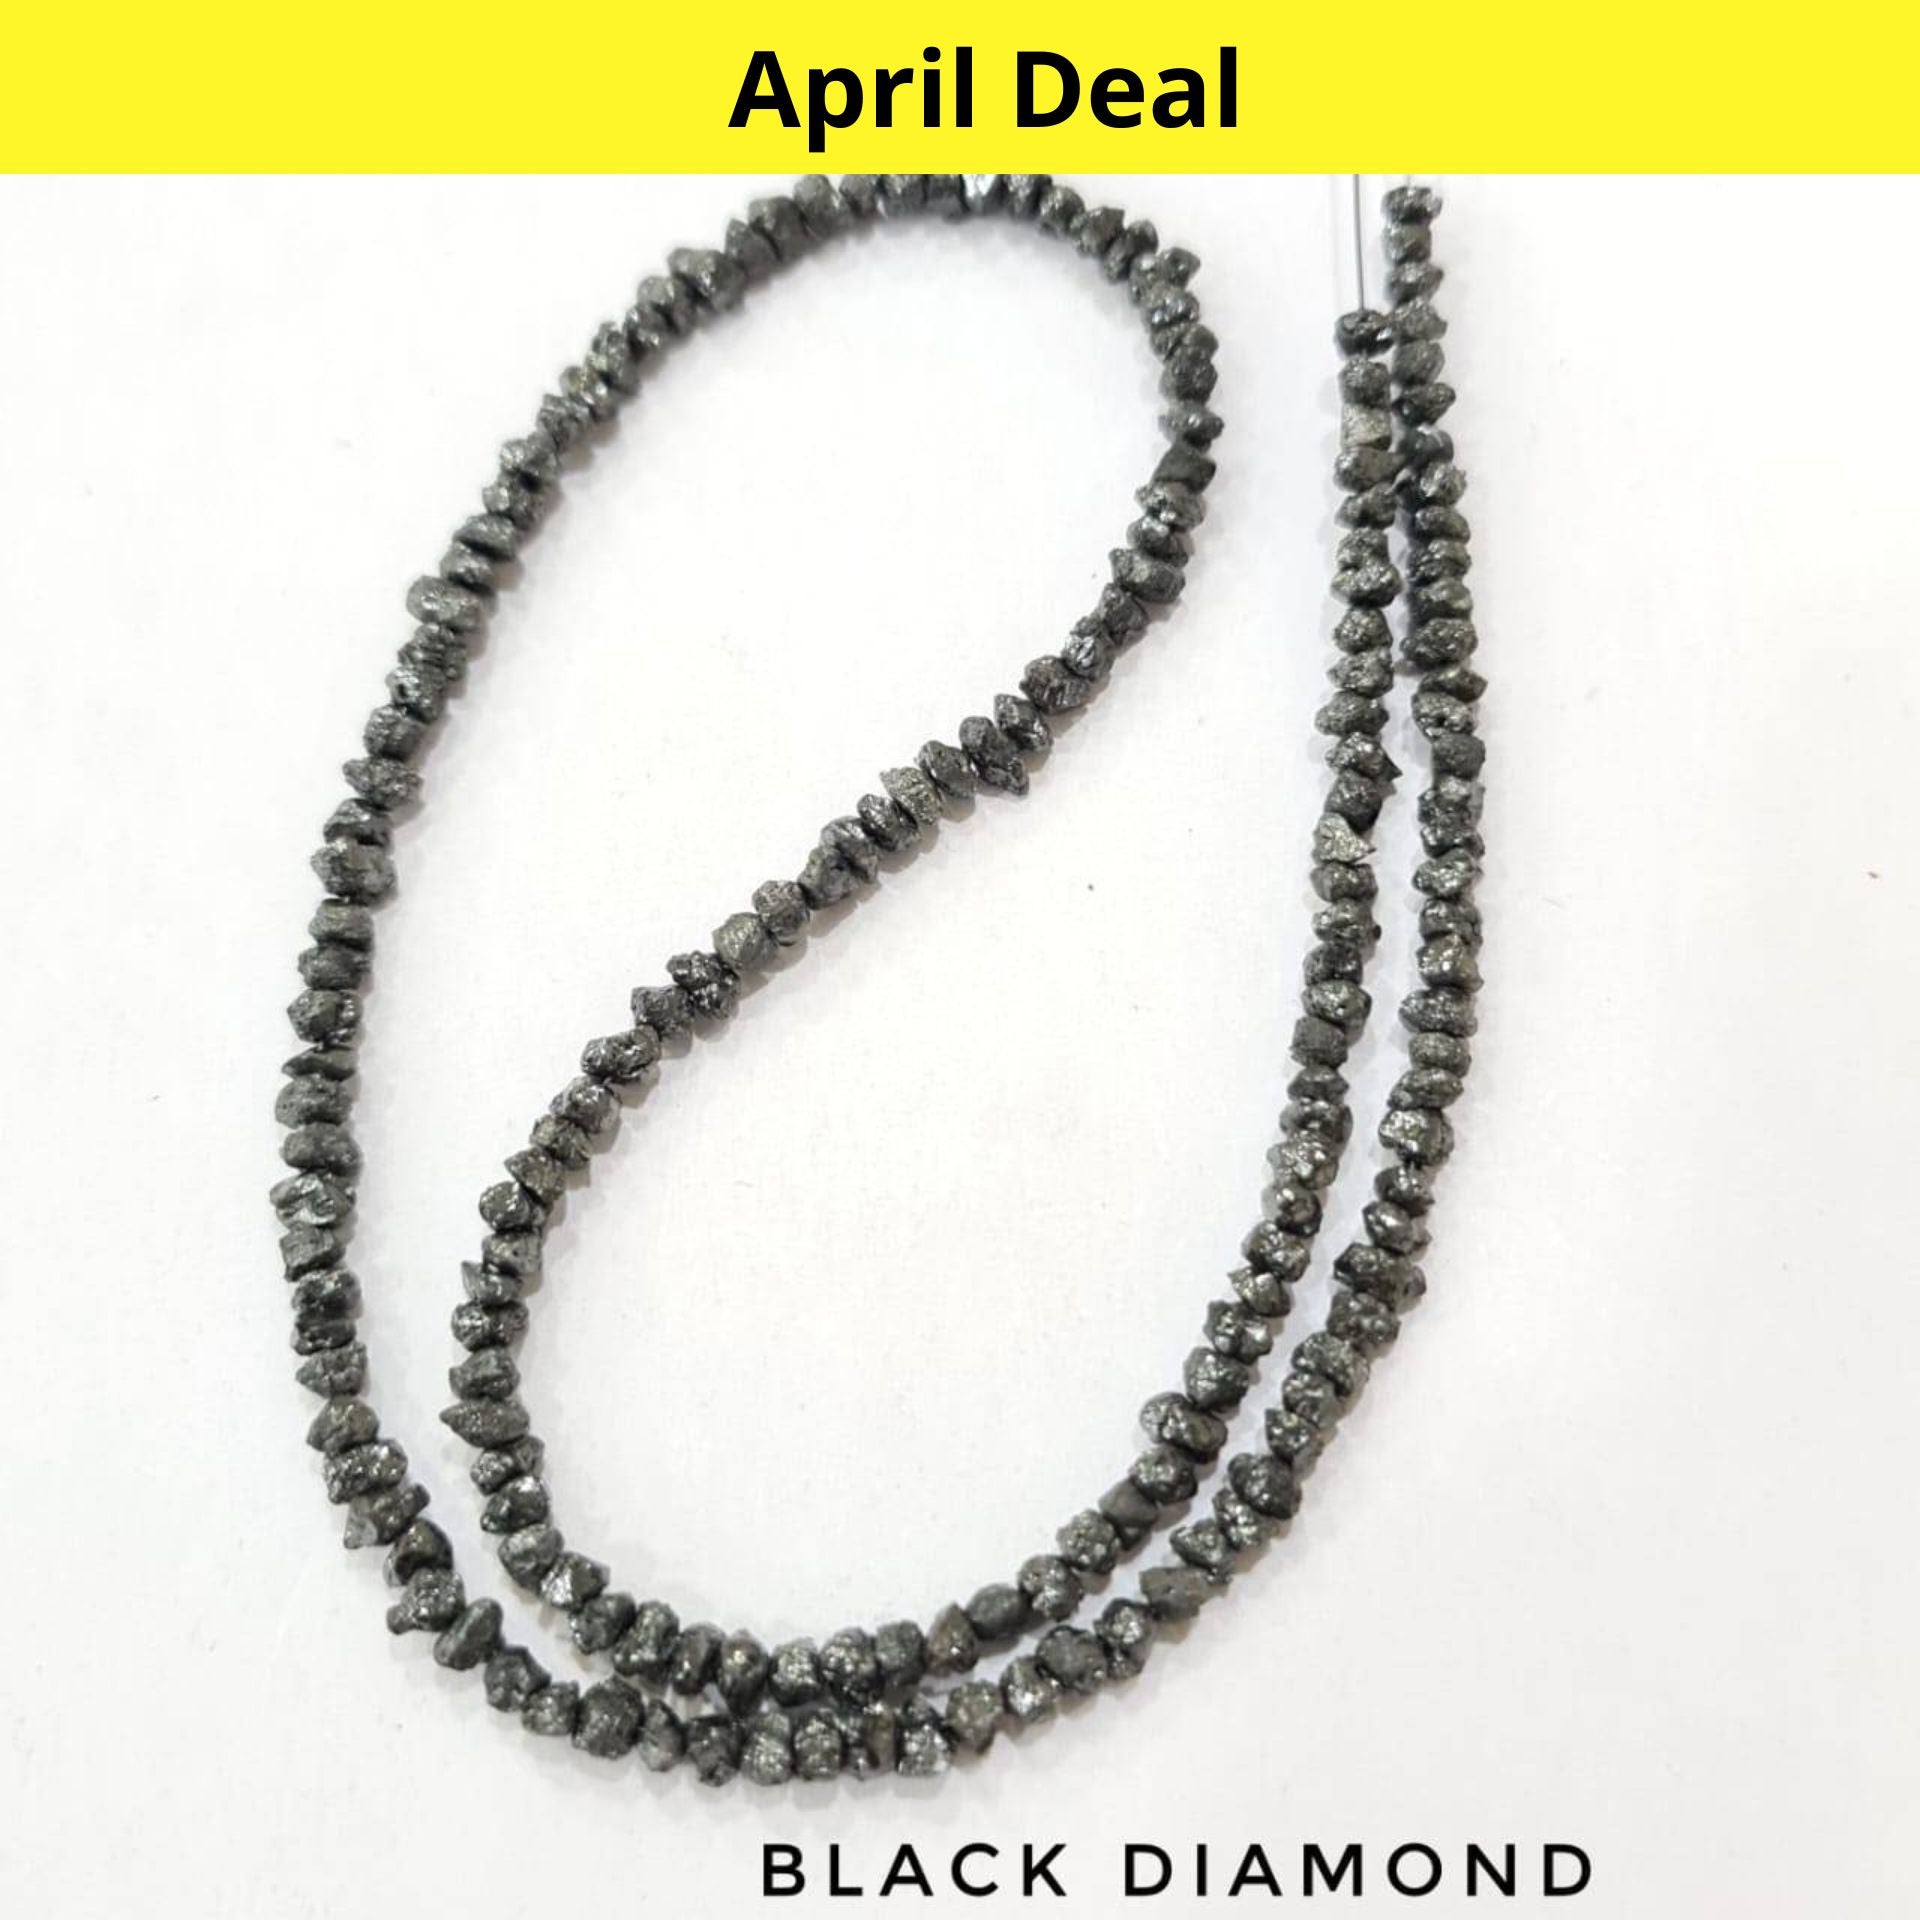 Black Diamond Rough Beads | 14 Inches | With Certificate - The LabradoriteKing